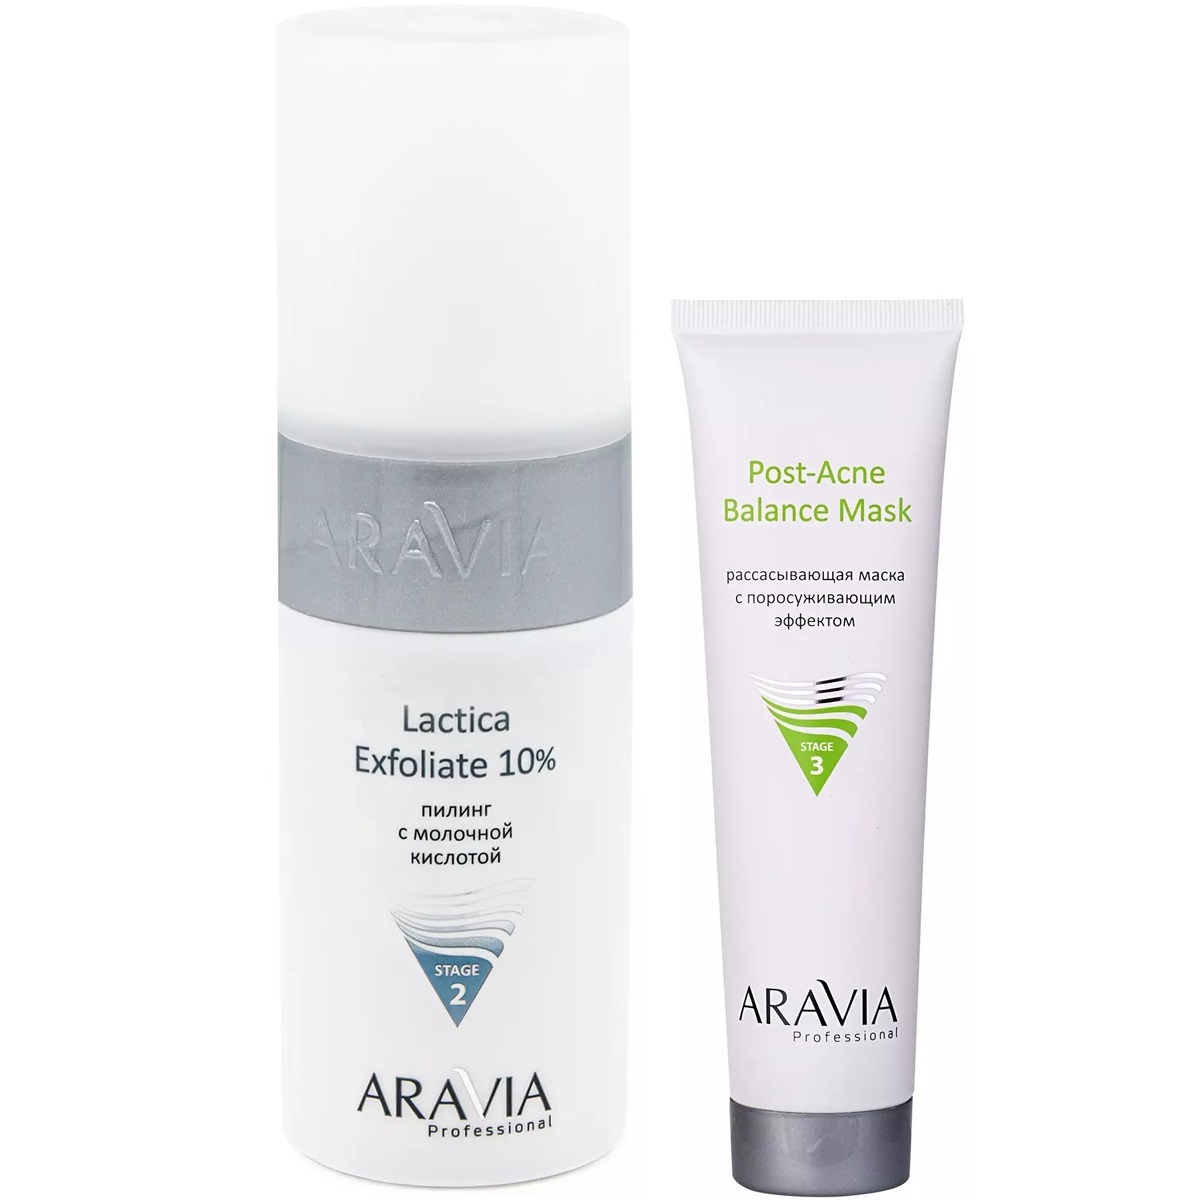 Aravia Professional Набор Чистая кожа: маска, 100 мл + пилинг, 150 мл (Aravia Professional, Уход за лицом) набор чистая кожа маска 100 мл пилинг 150 мл